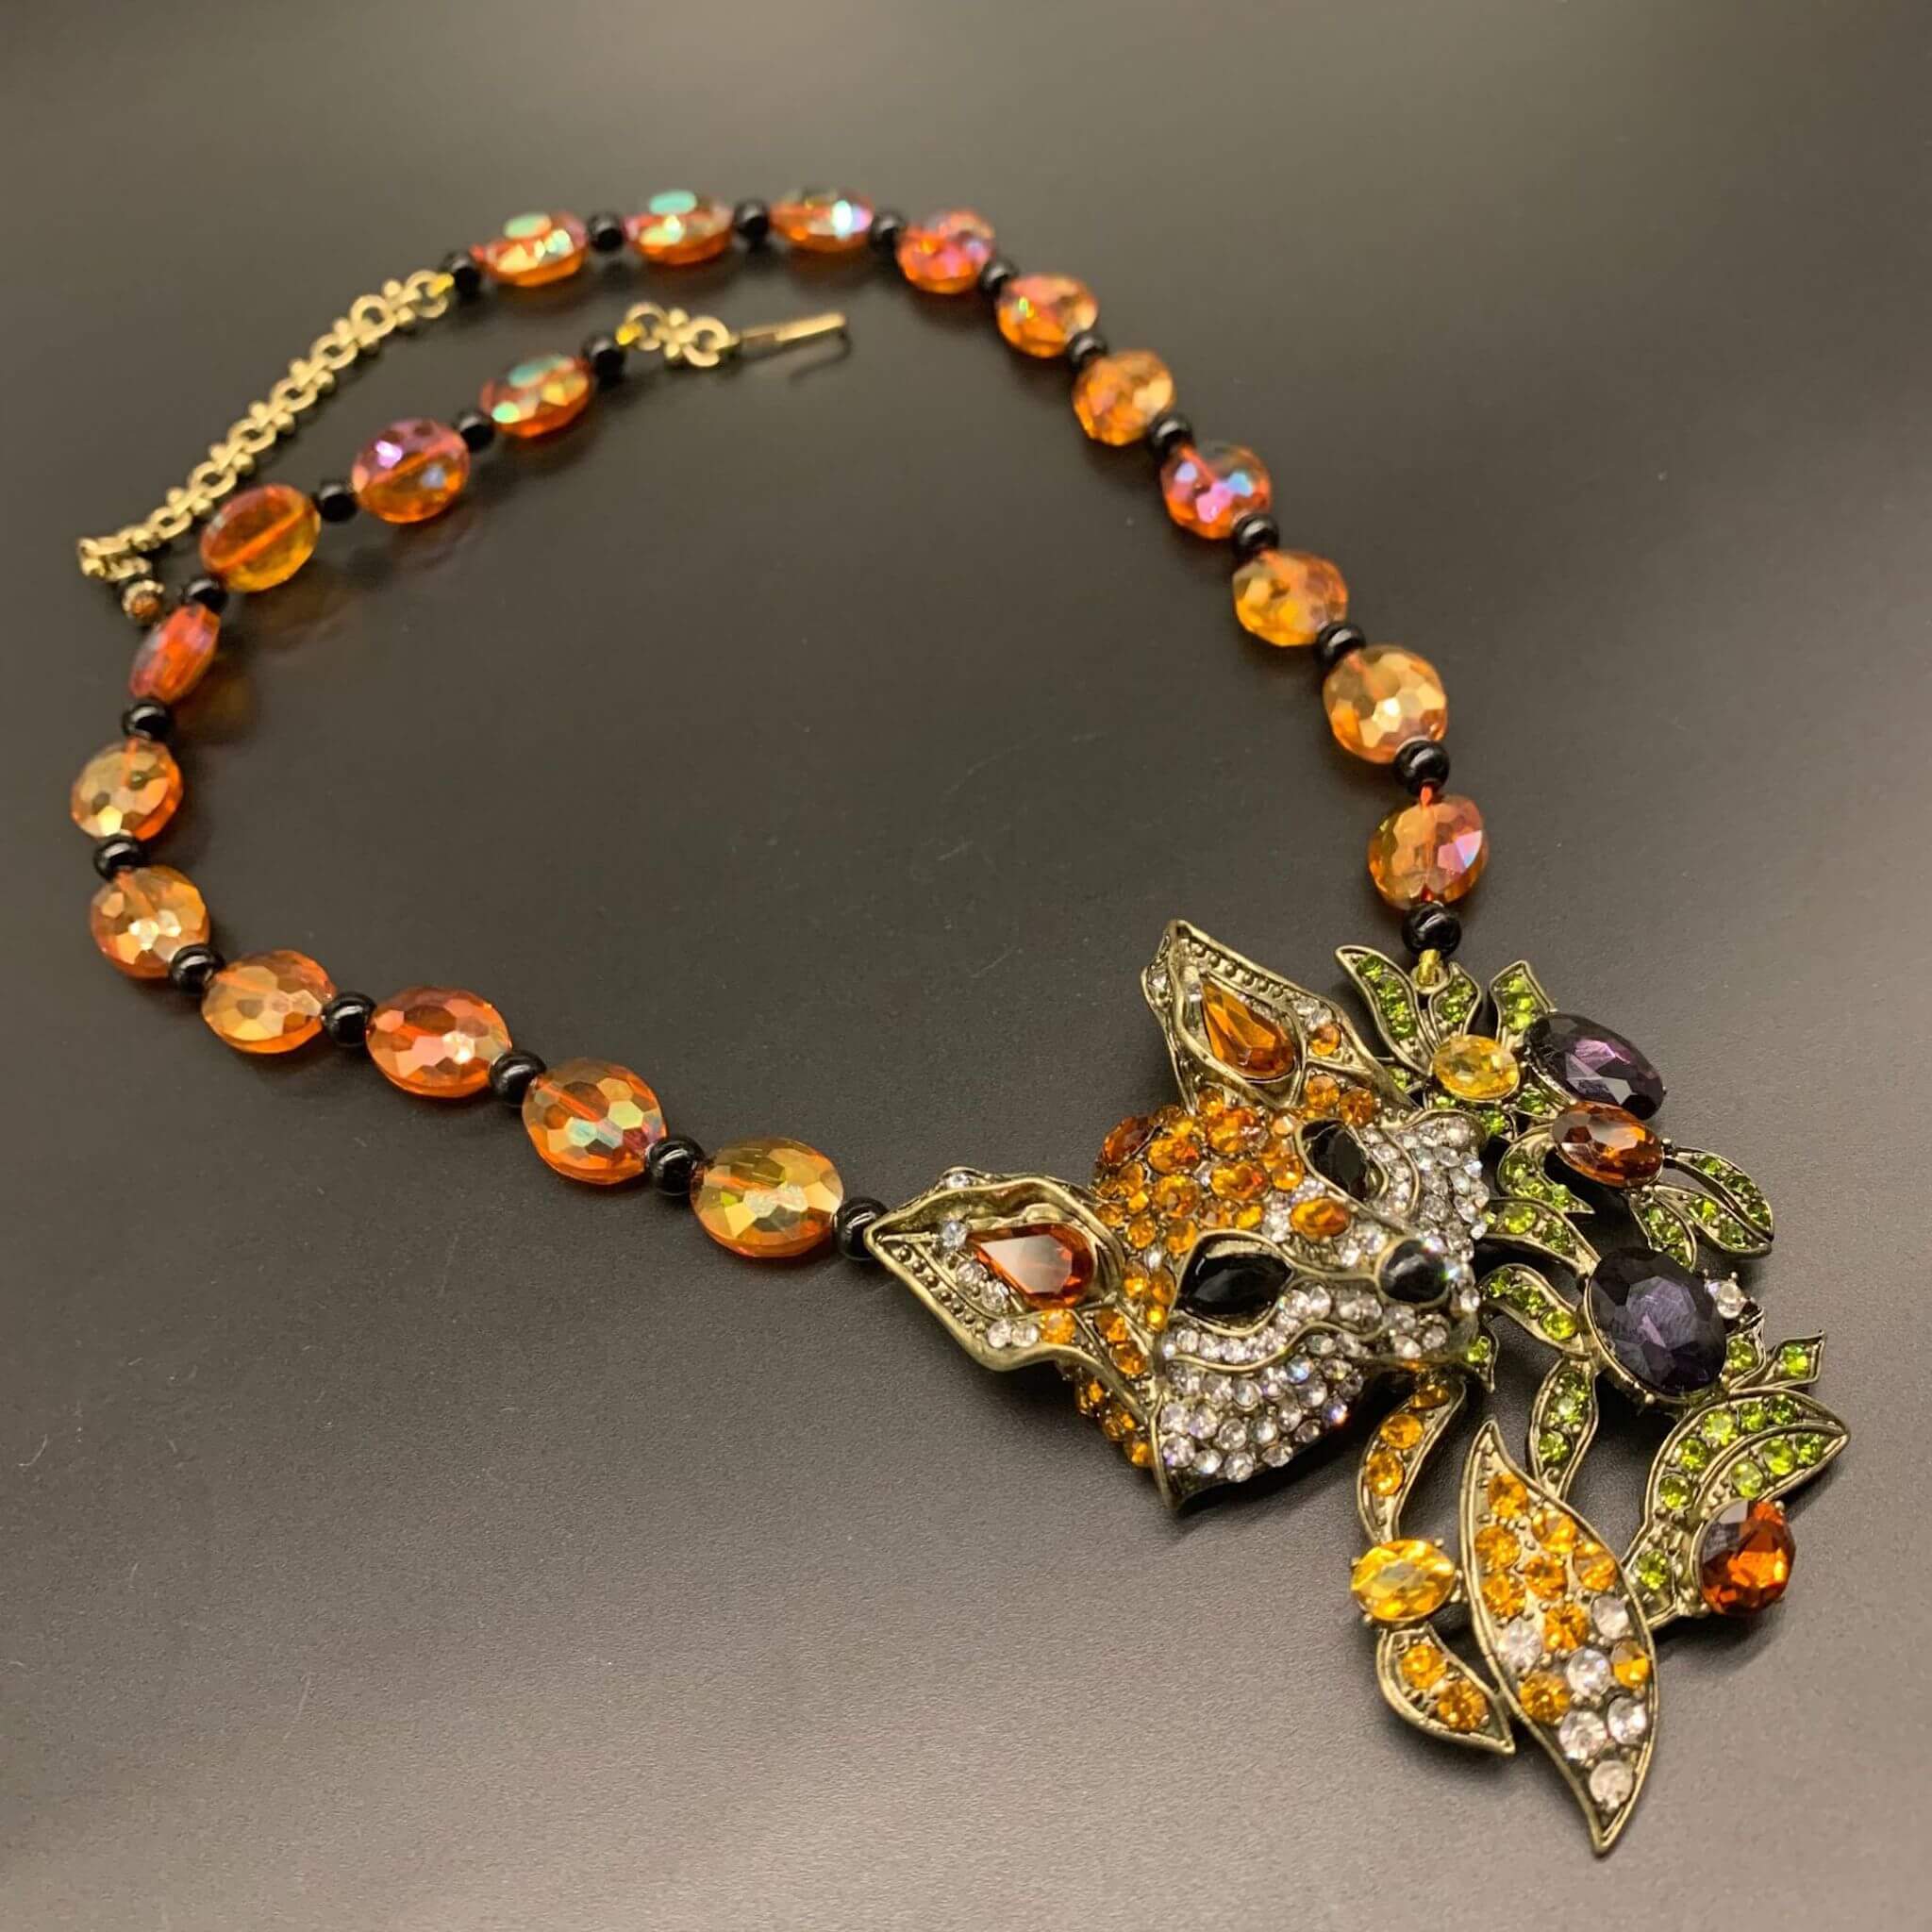 Vintage Glass Fox Pendant Necklace - Artistic Retro Charm  UponBasics Necklace Golden 